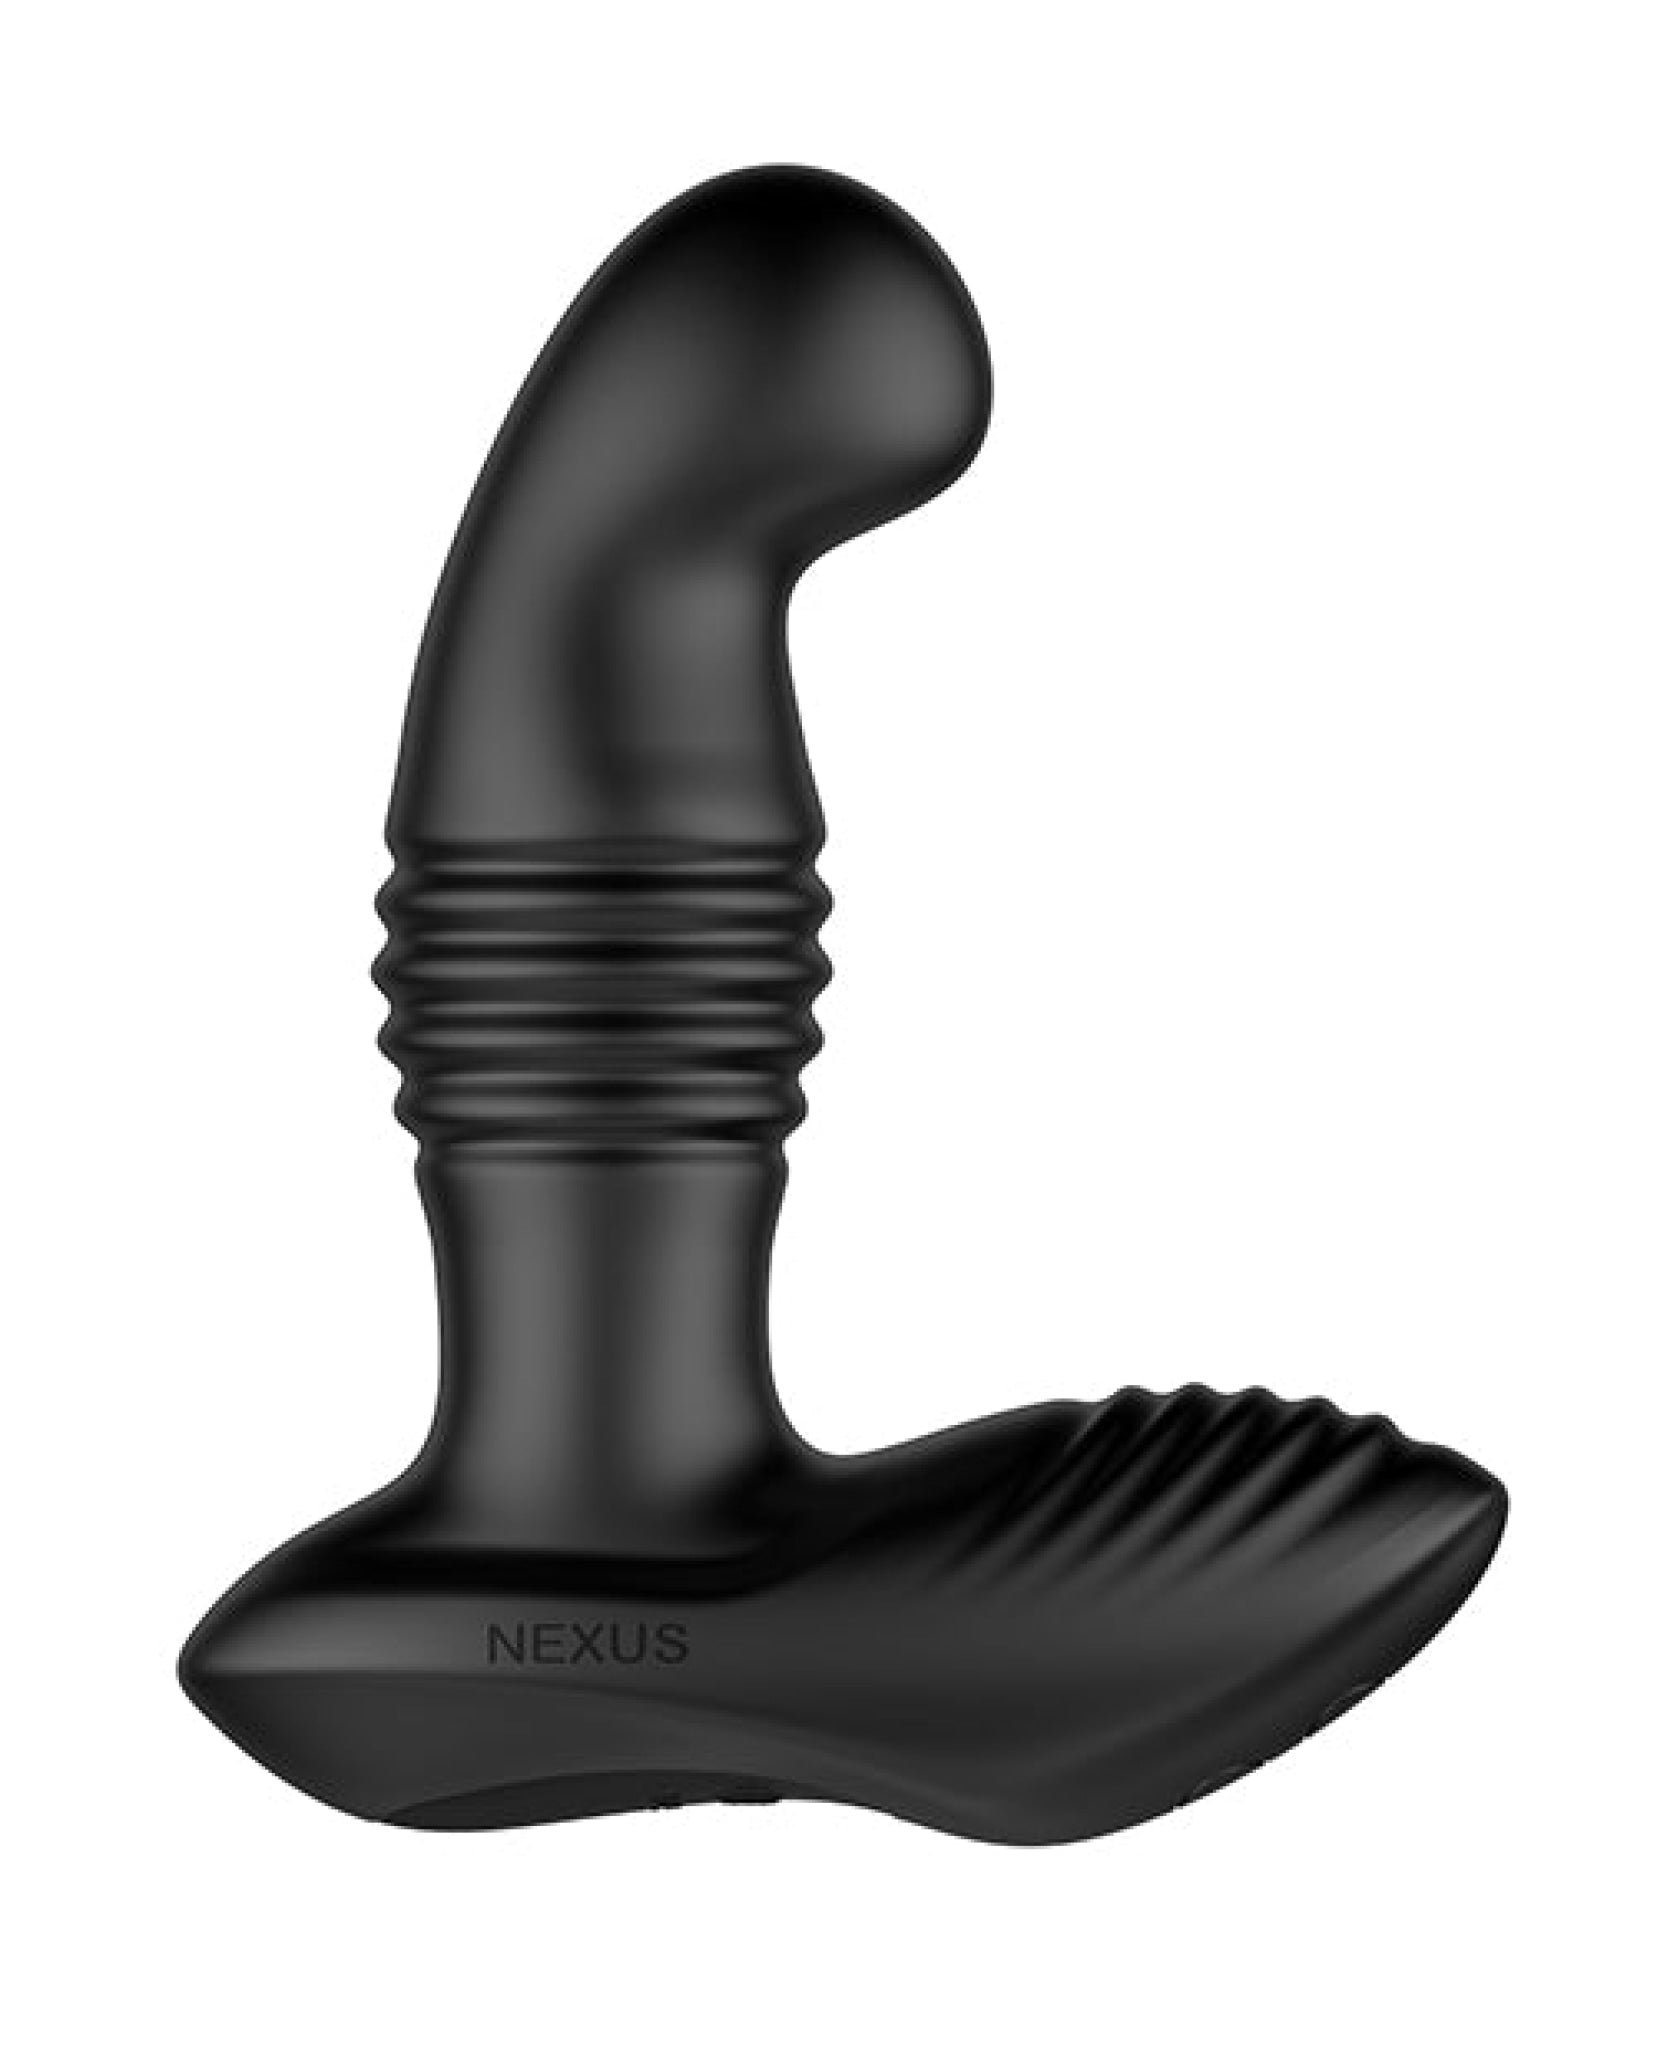 Nexus Thrust Prostate Edition - Black Nexus